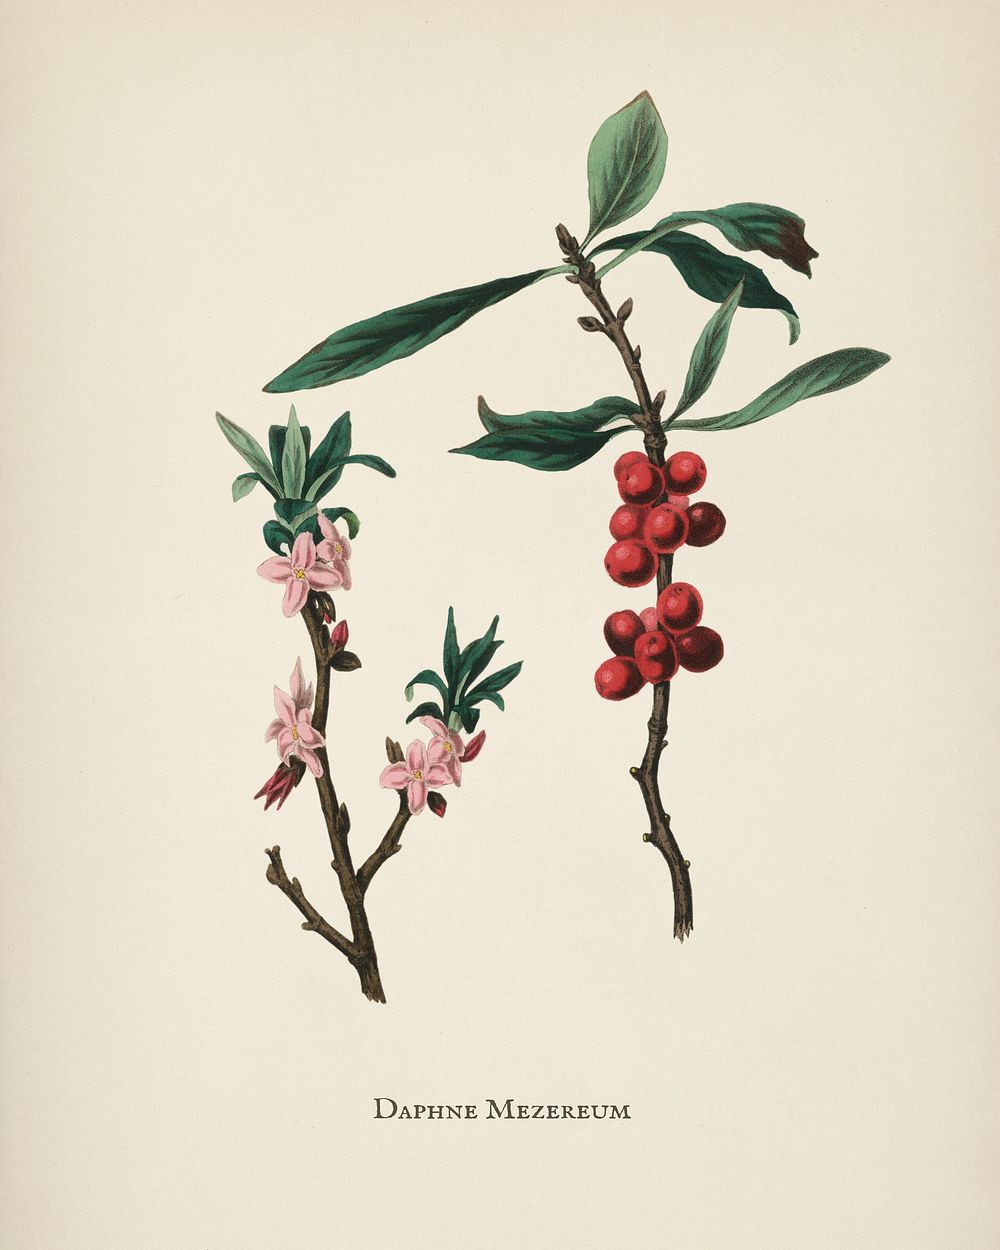 February daphne (Daphne mezereum) illustration from Medical Botany (1836) by John Stephenson and James Morss Churchill.